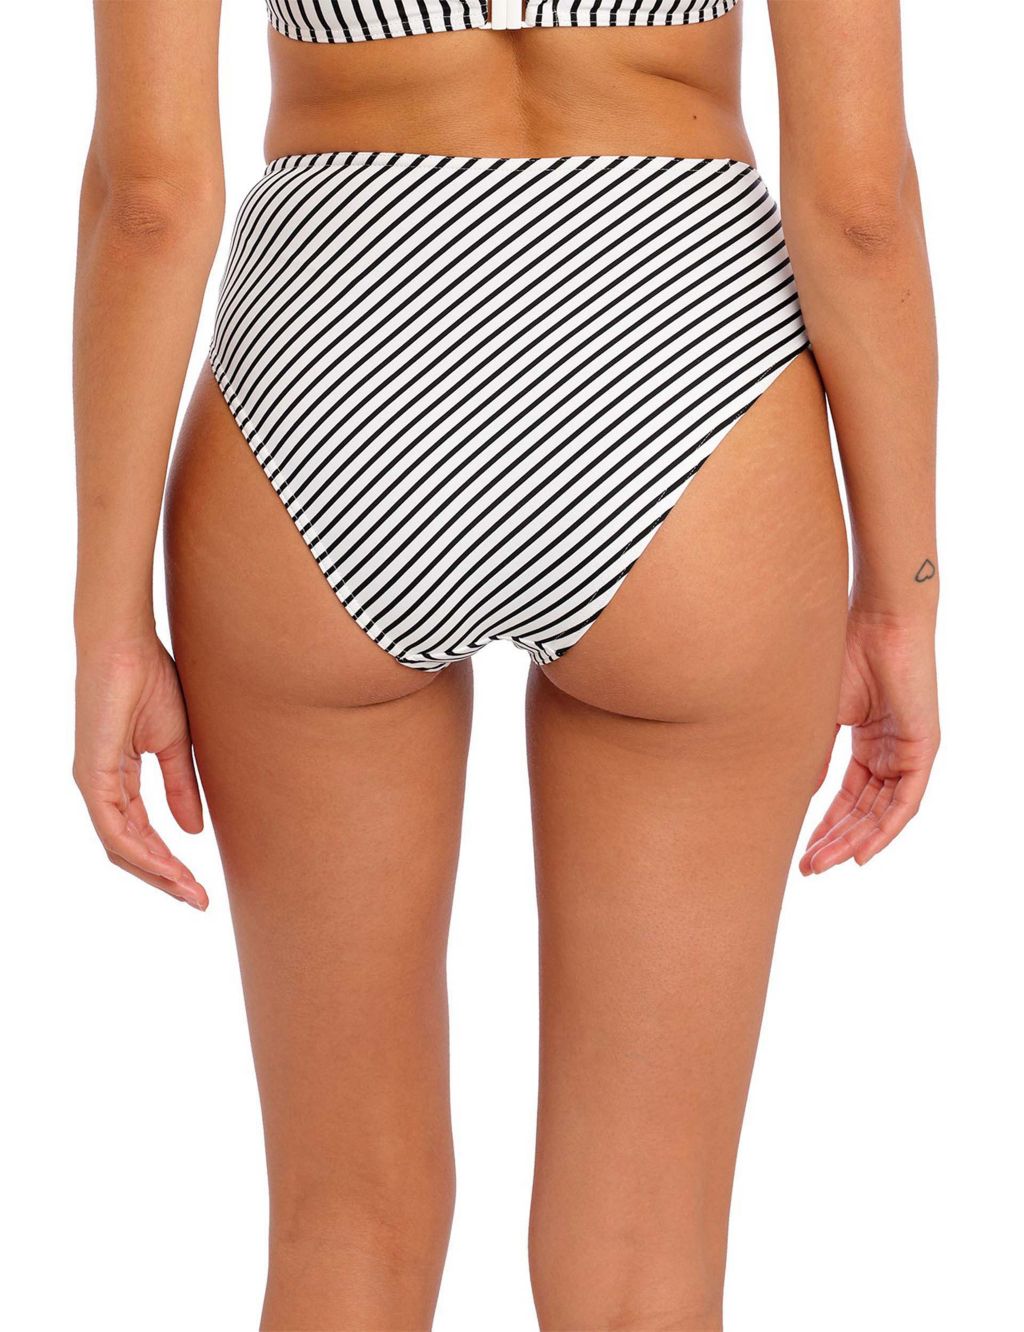 Jewel Cove High Waisted Bikini Bottoms image 4